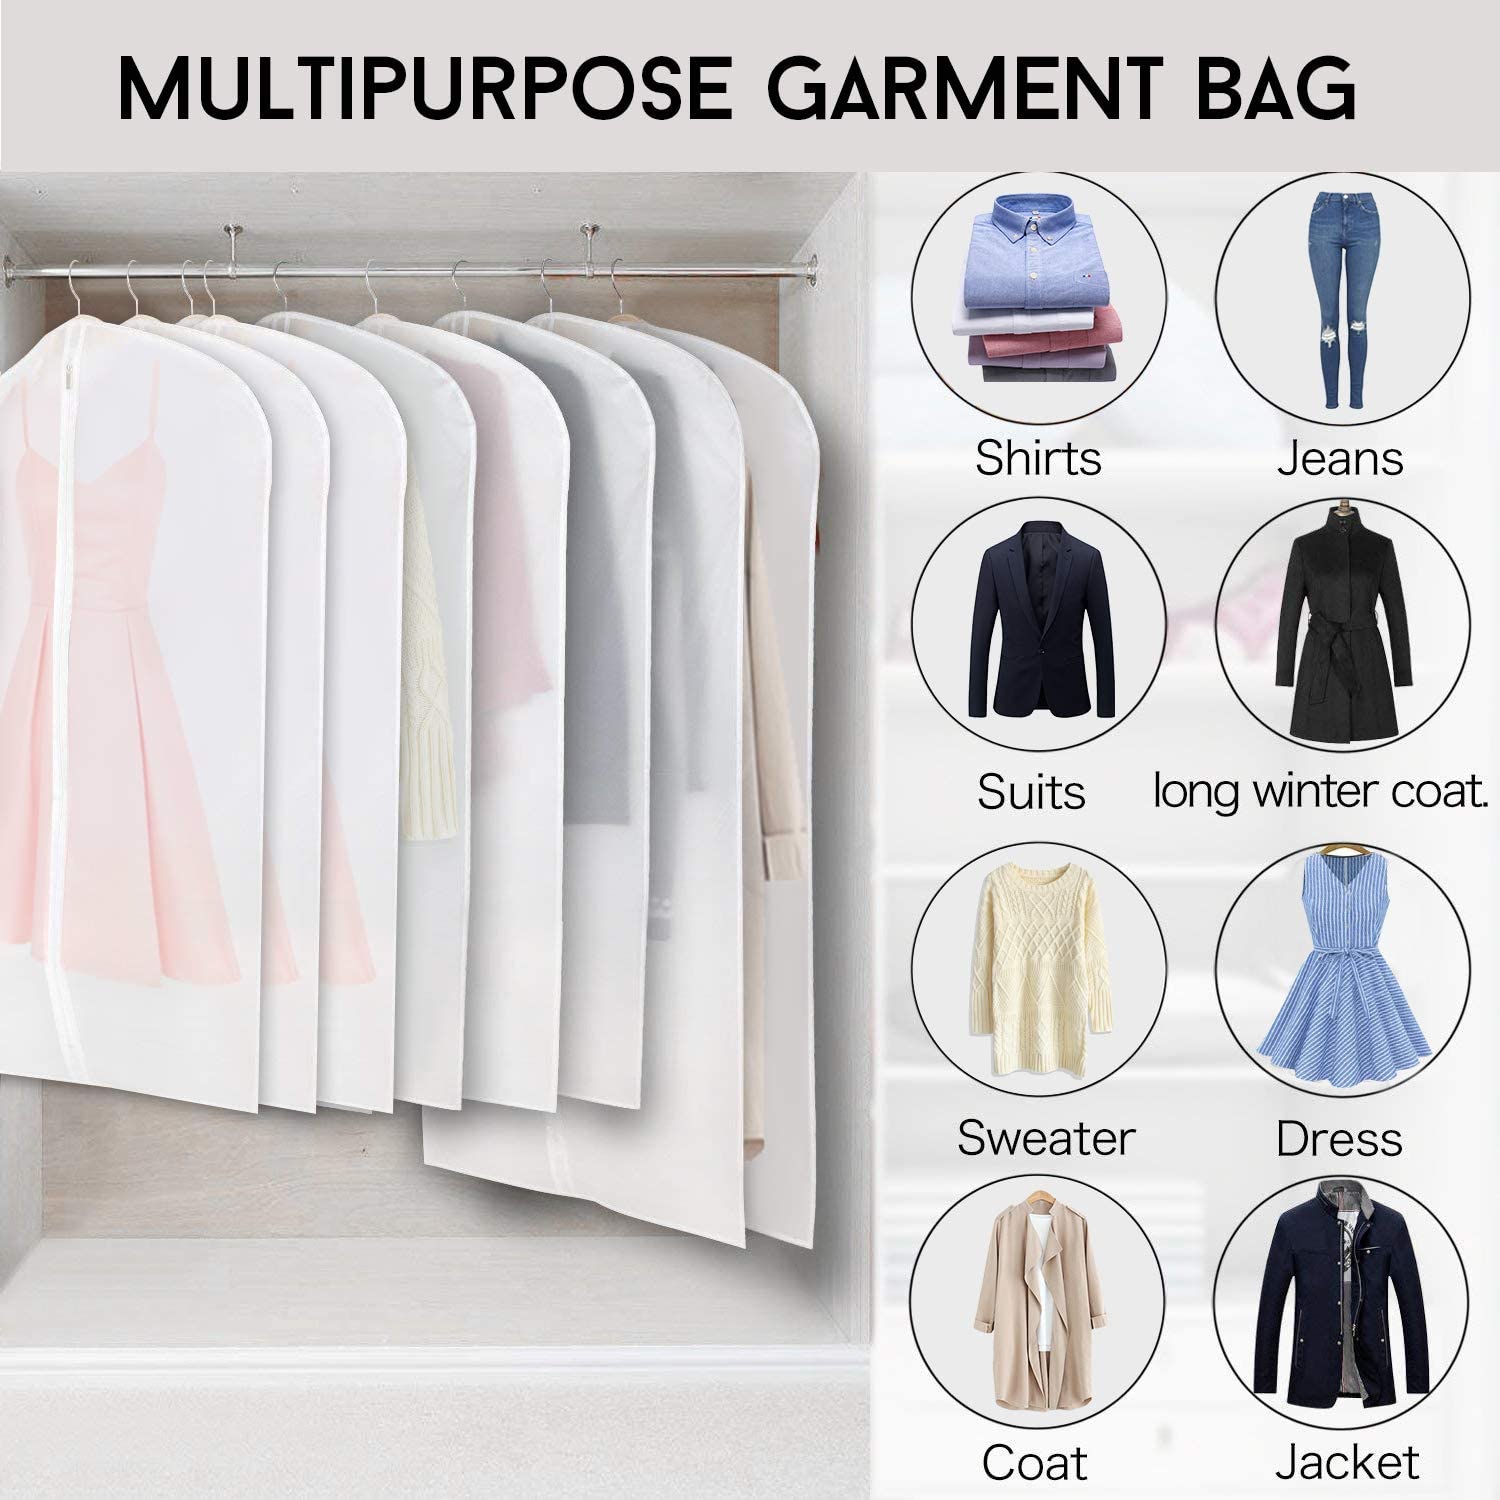 Magicfly Clear Garment Bag Pack of 4 PEVA Suit Bags Full Zipper Garment Cover